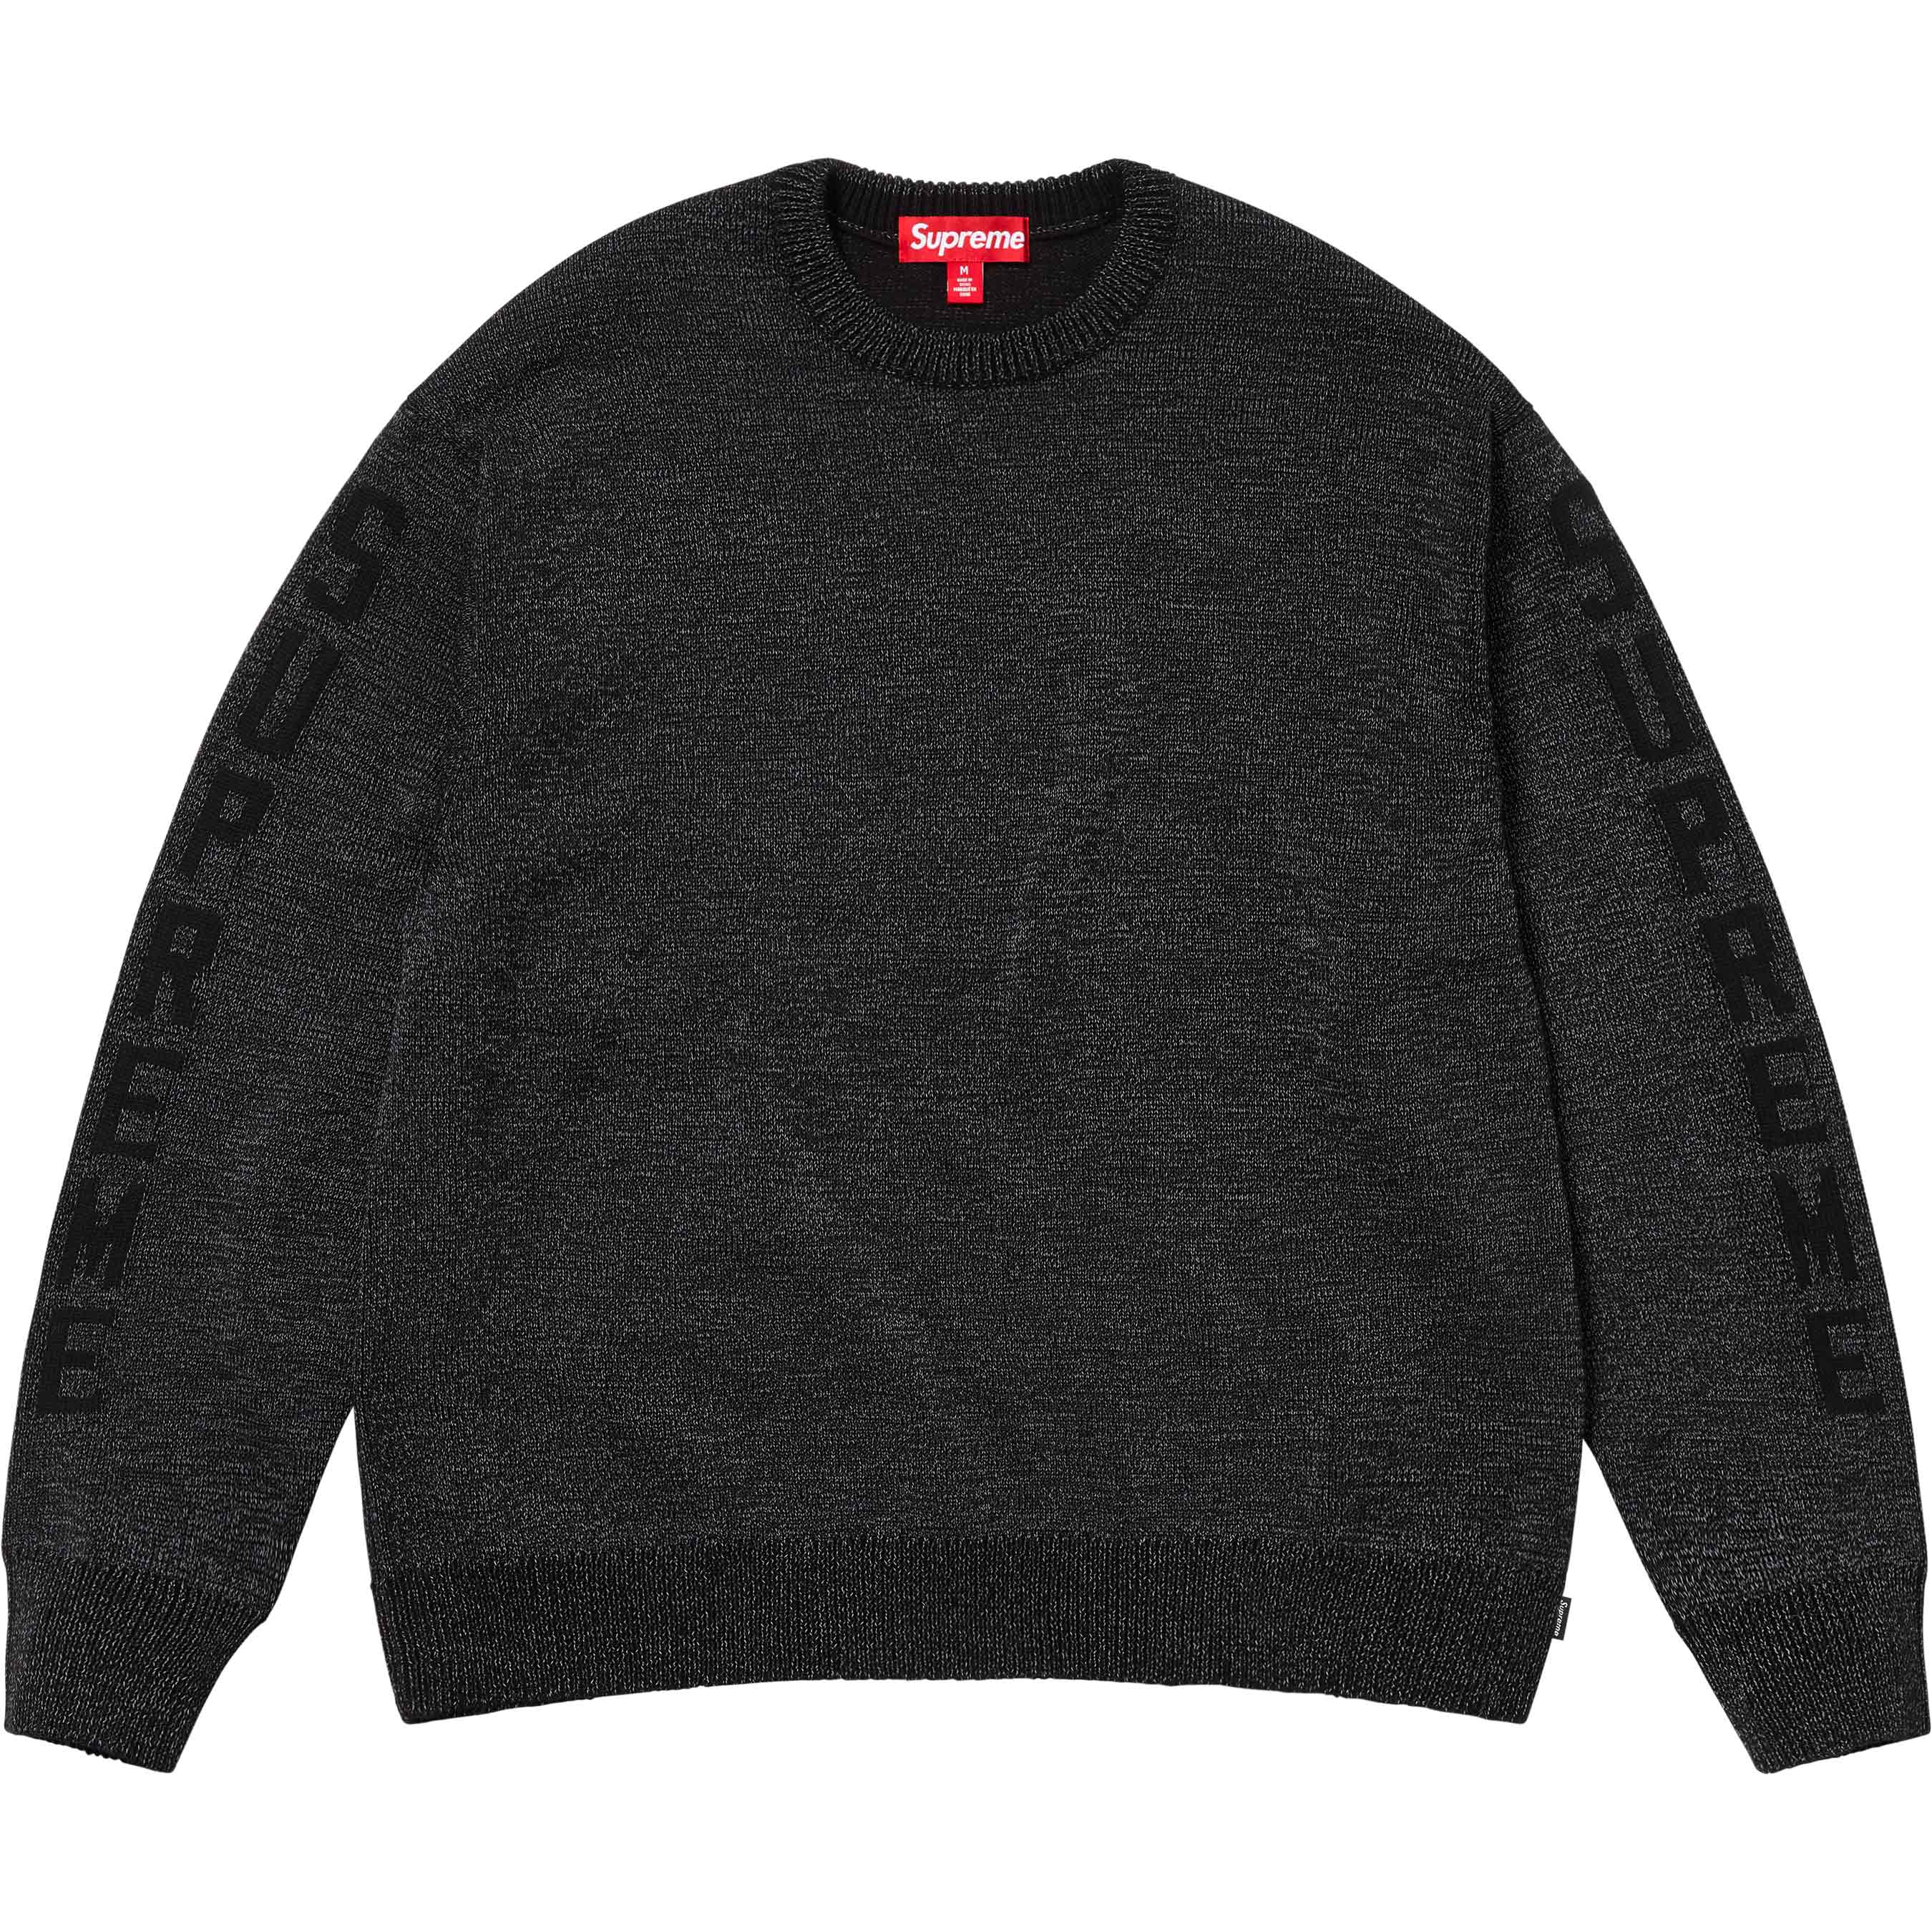 Reflective Sweater - Shop - Supreme